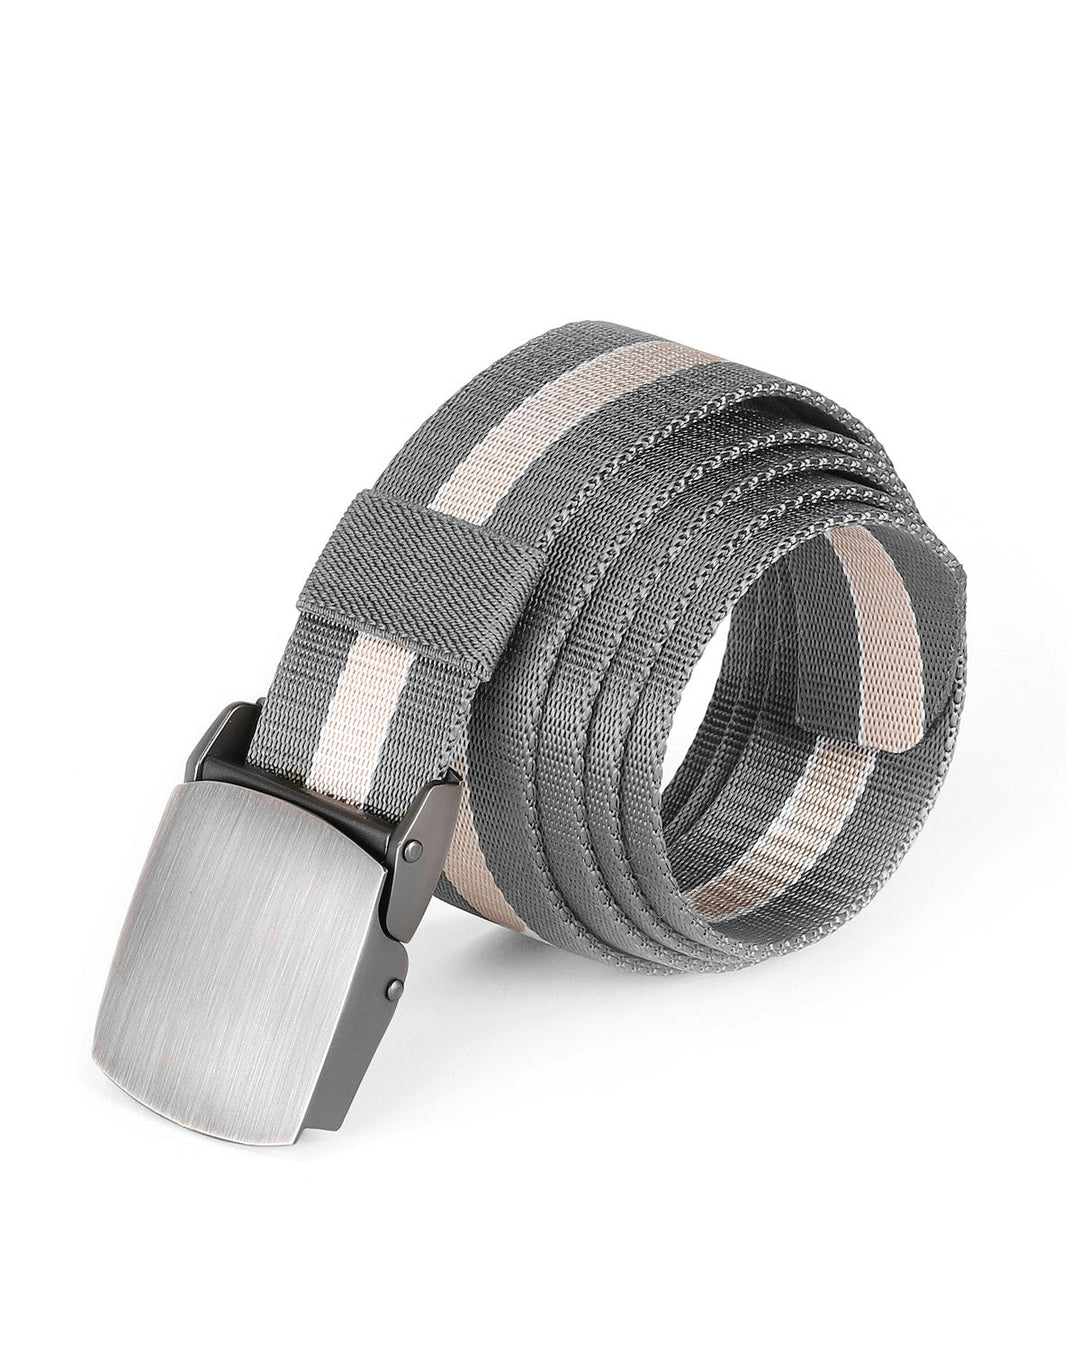 One Size Adjustable Strap Stripe Nylon Web Belt with Metal Buckle